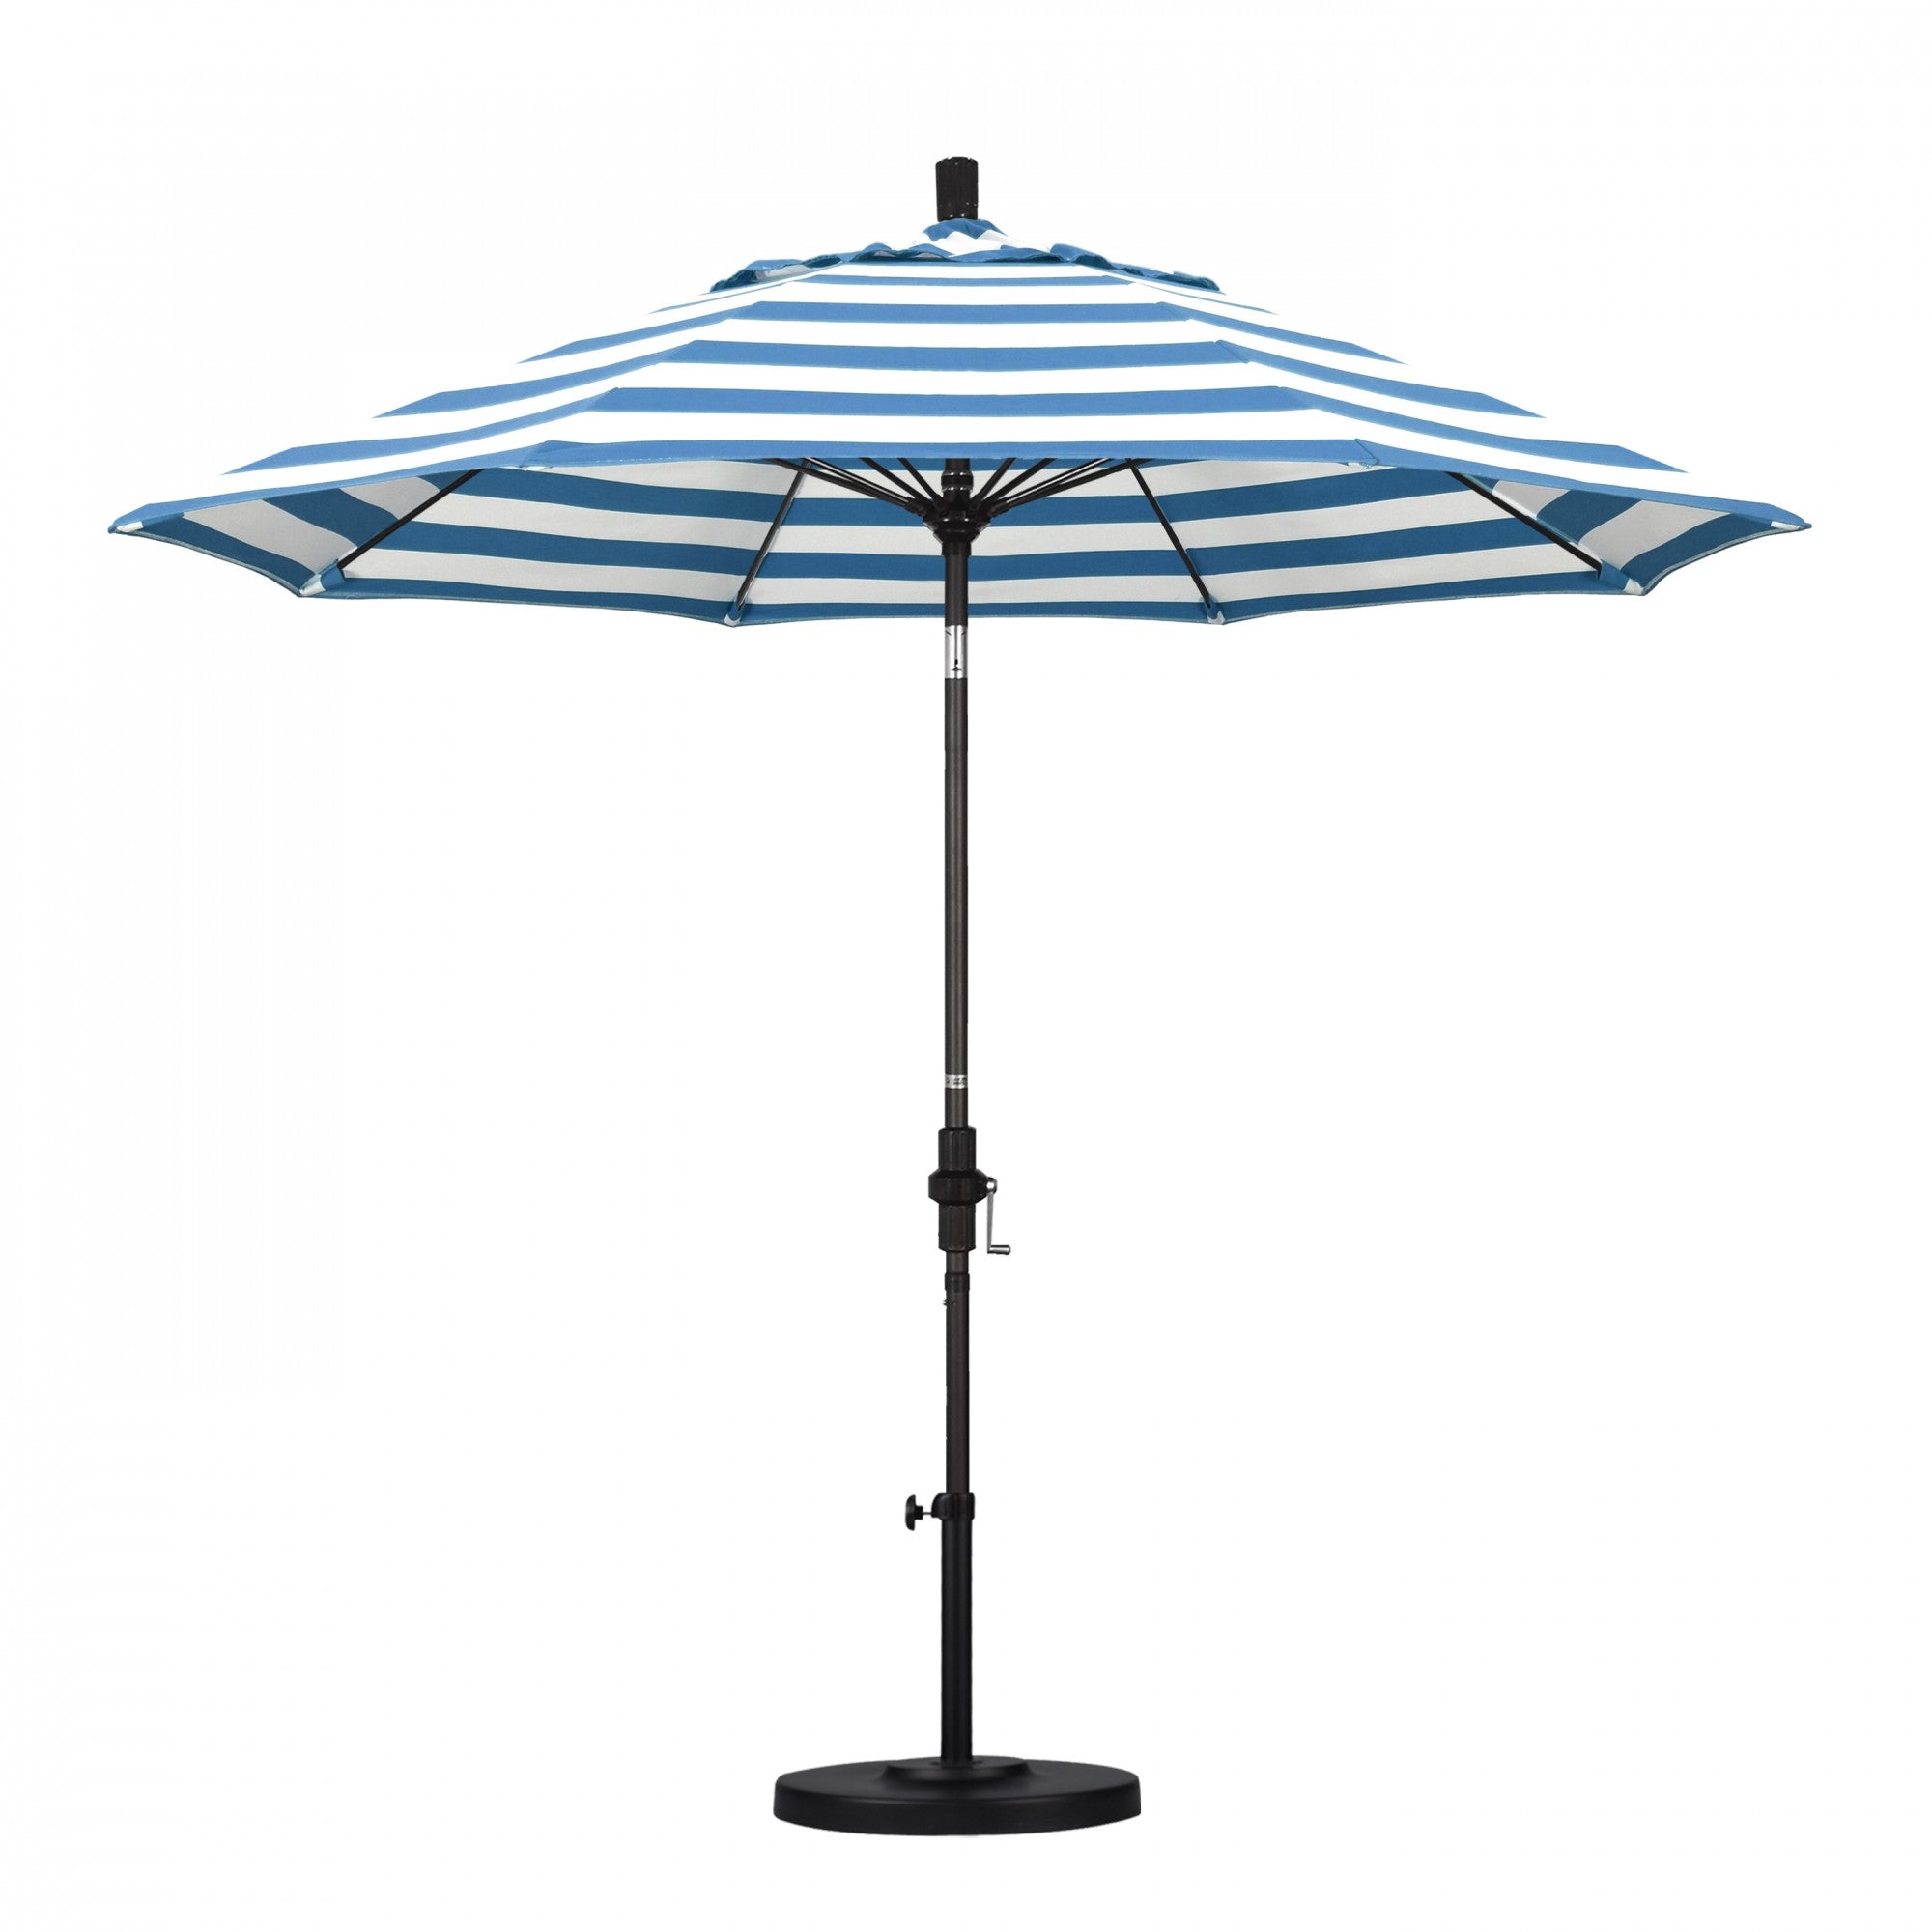 California Umbrella - 9' - Patio Umbrella Umbrella - Aluminum Pole - Cabana Regatta  - Sunbrella  - GSCUF908705-58029